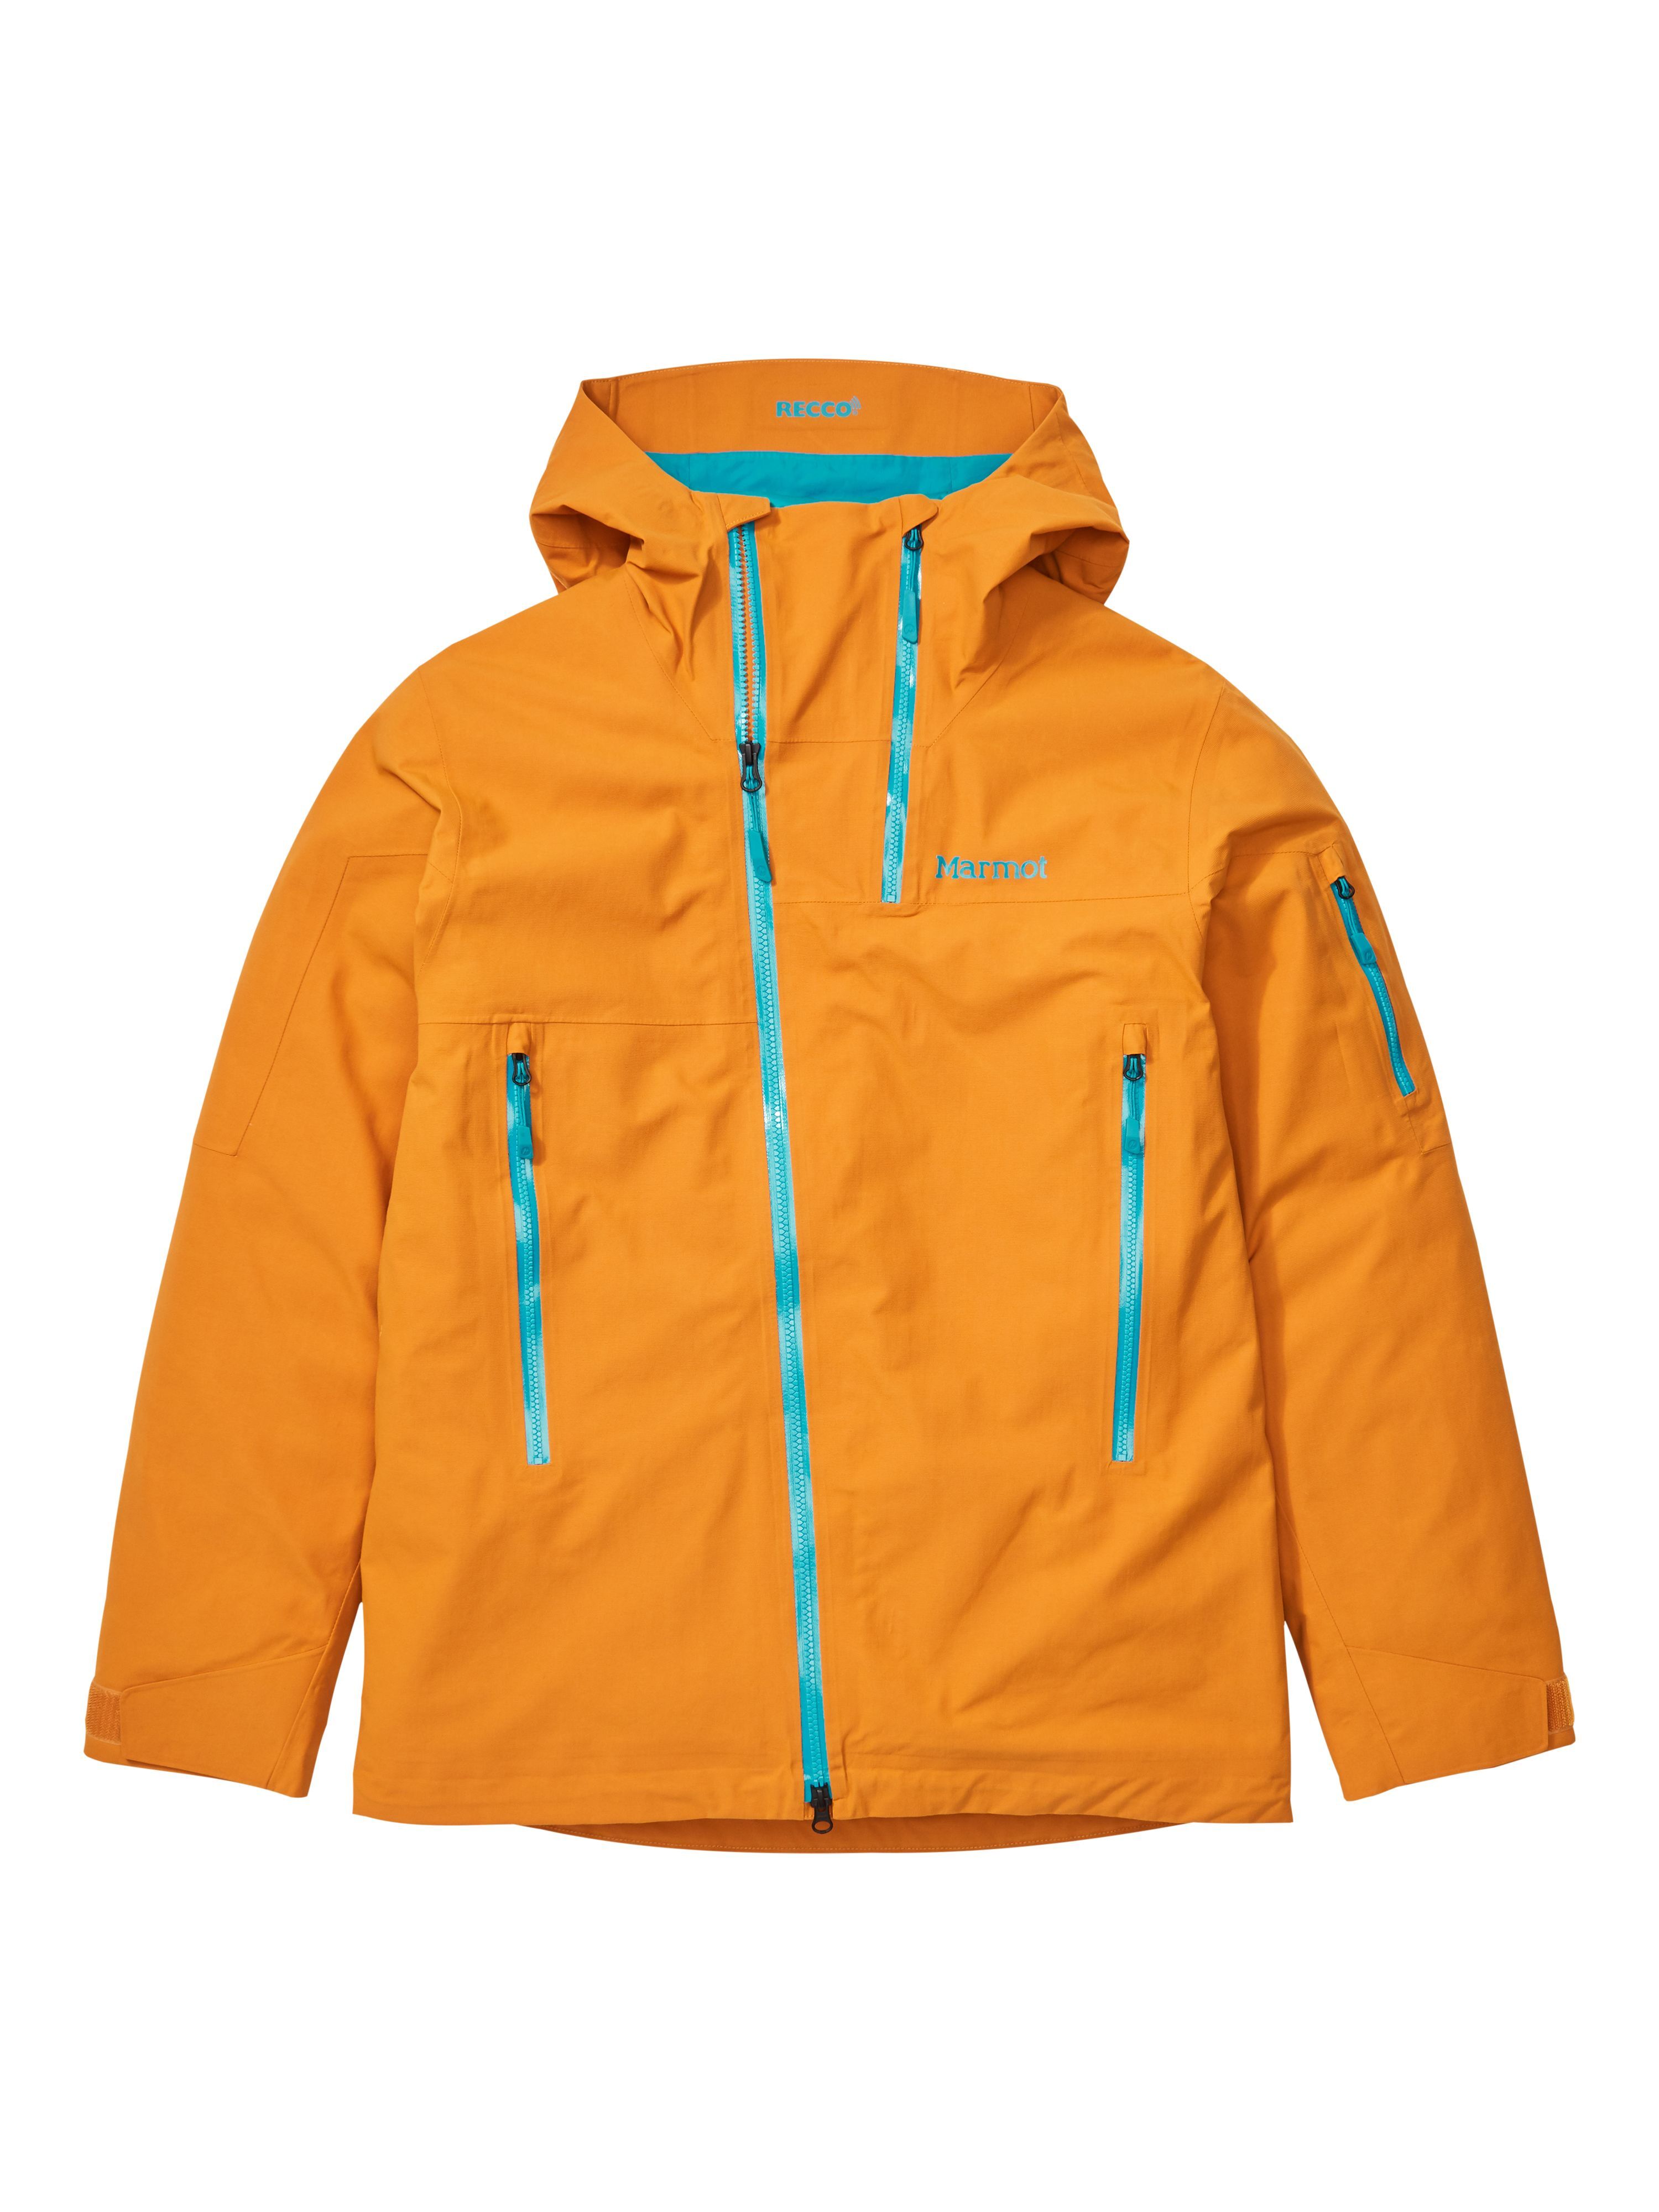 Marmot Freerider Jacket - Ski jacket - Men's